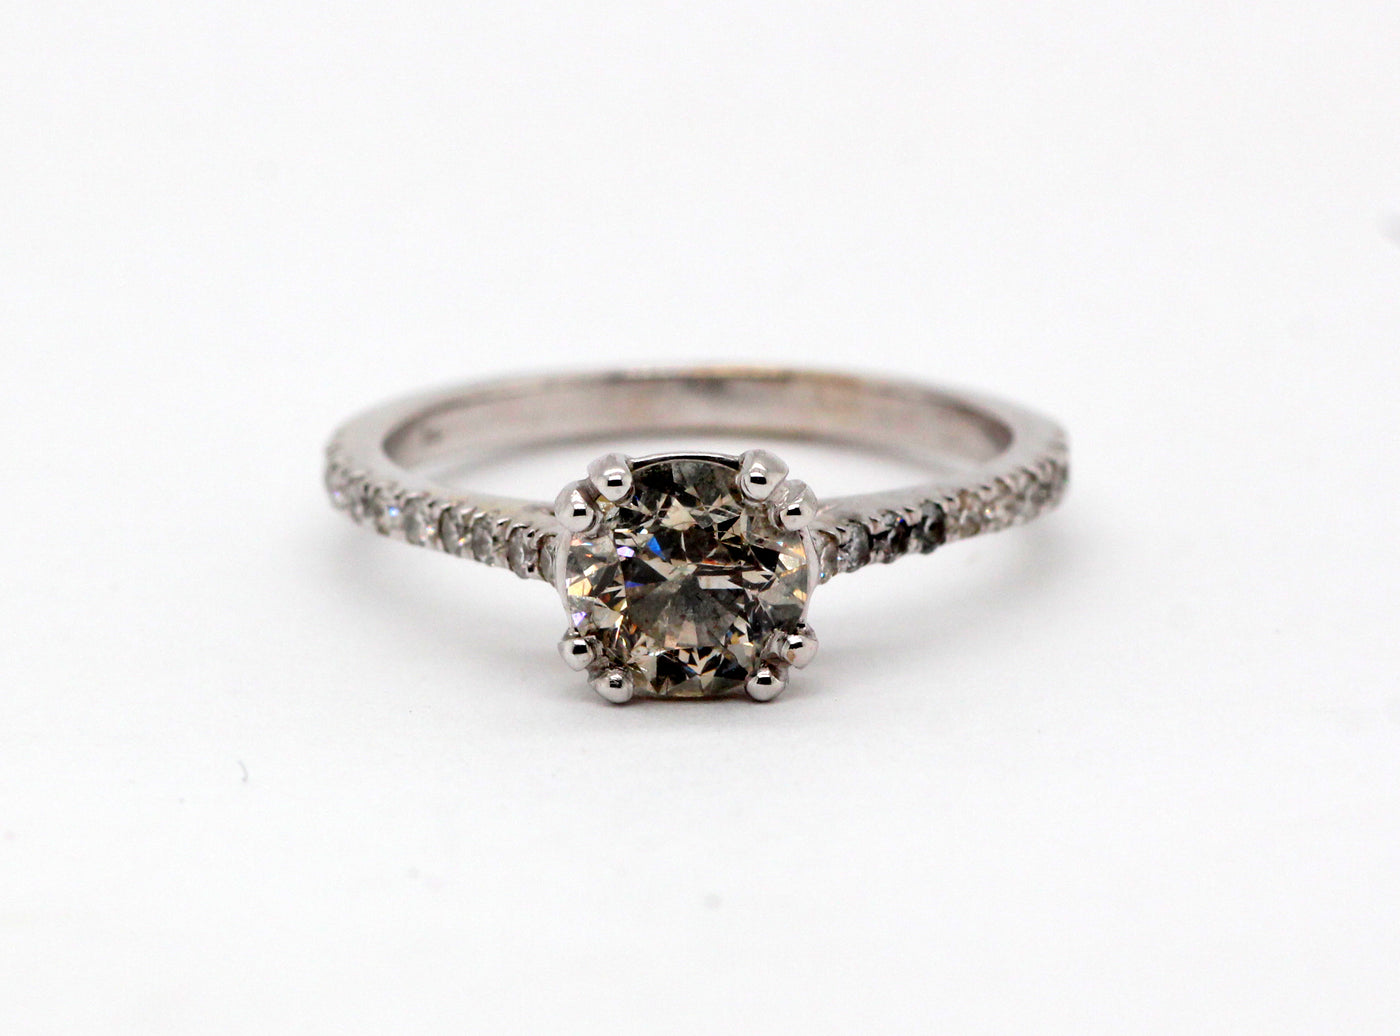 Estate 14kw 1.17 cttw diamond engagement ring, 1.02 ct brown round diamond center, i1